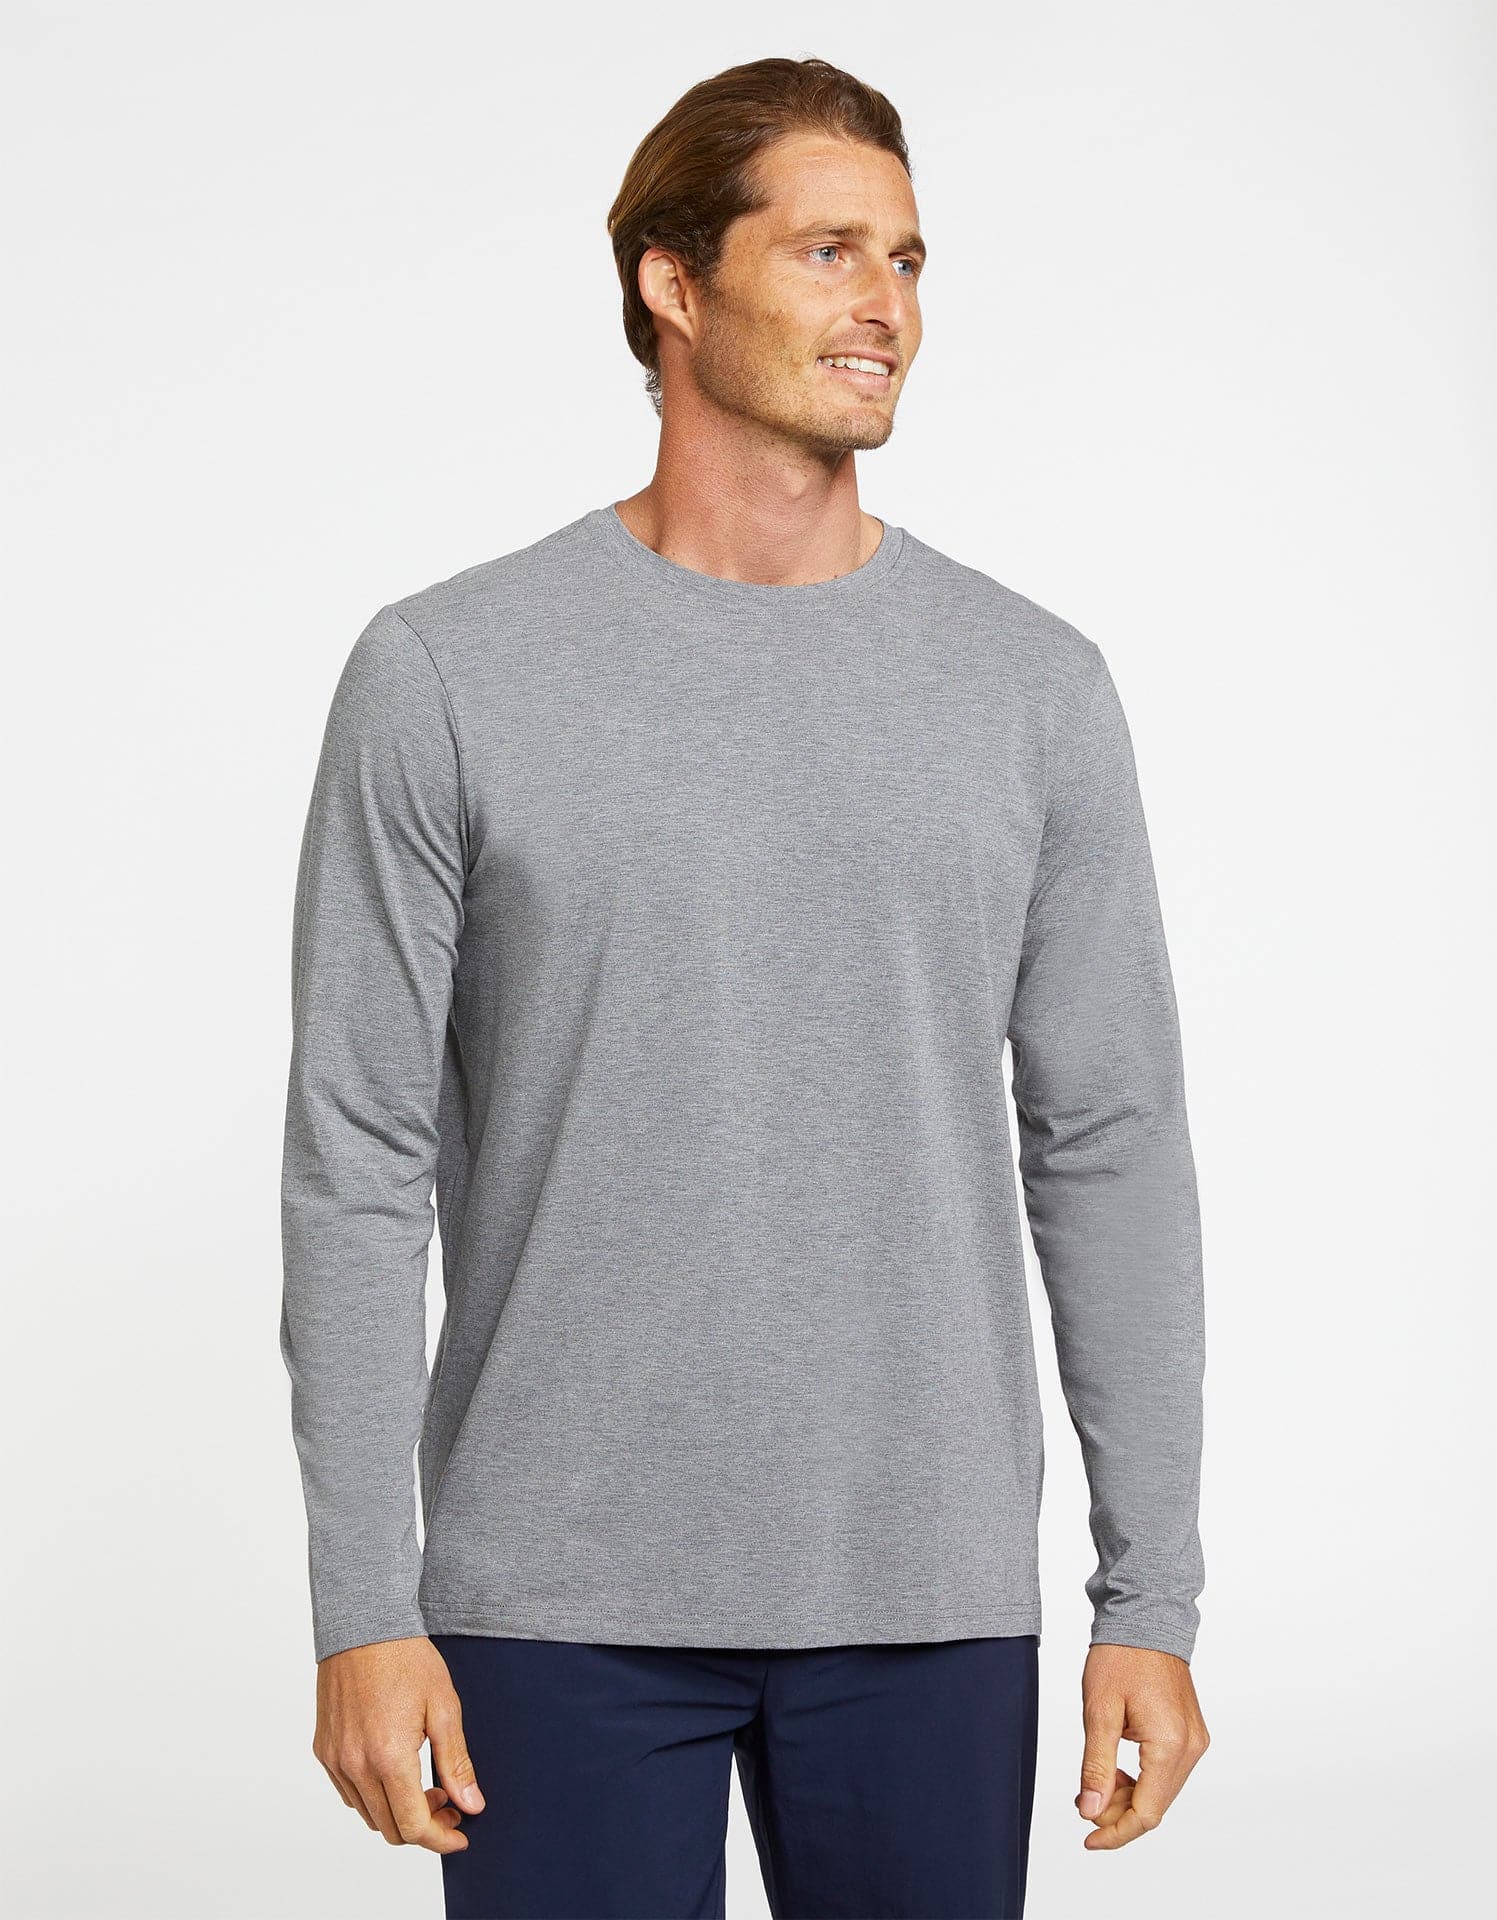 Sun Protective Long Sleeve T-Shirt For Men | UPF 50+ Sun Protection Light Grey Marle